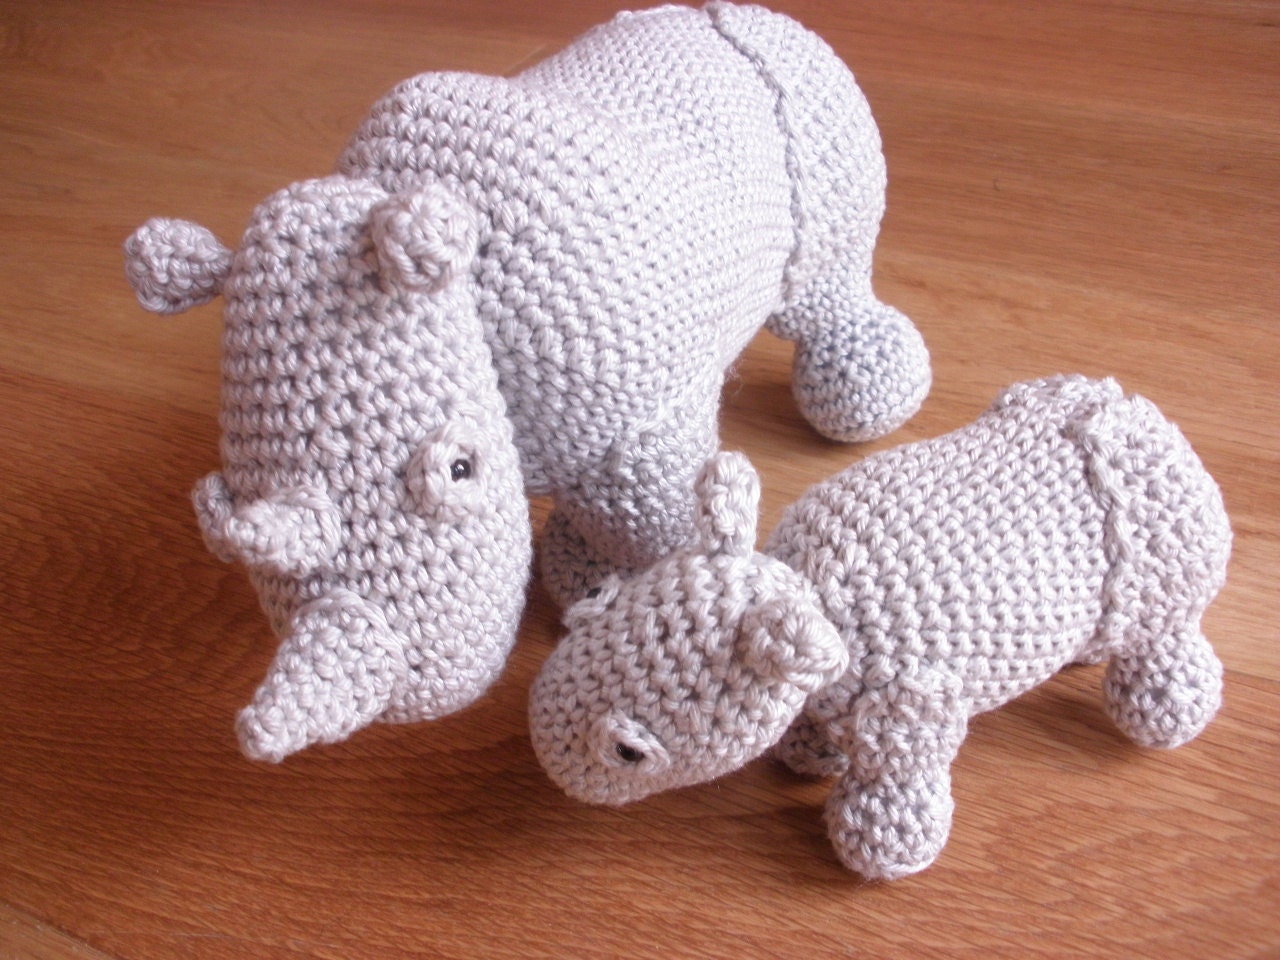 Rhino mom and baby stuffed toys